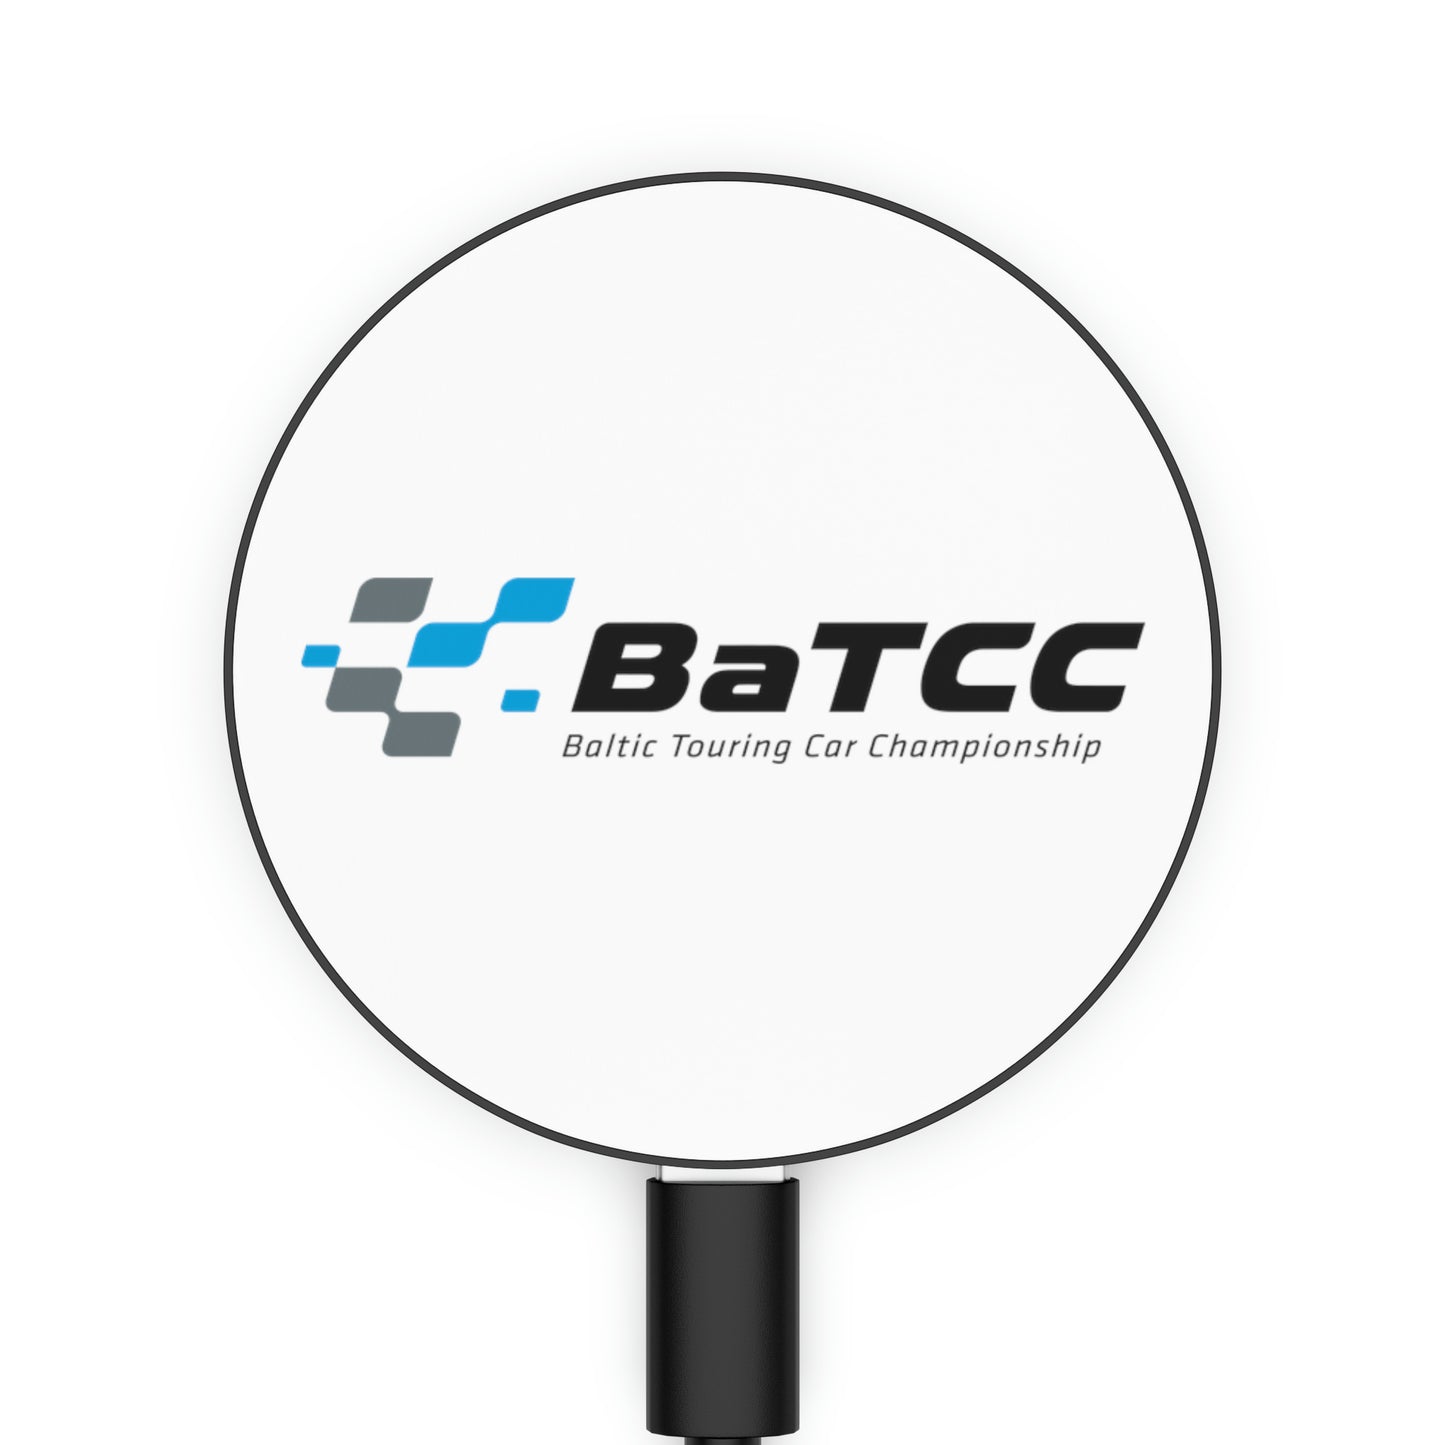 Magnetic Induction Charger BaTCC